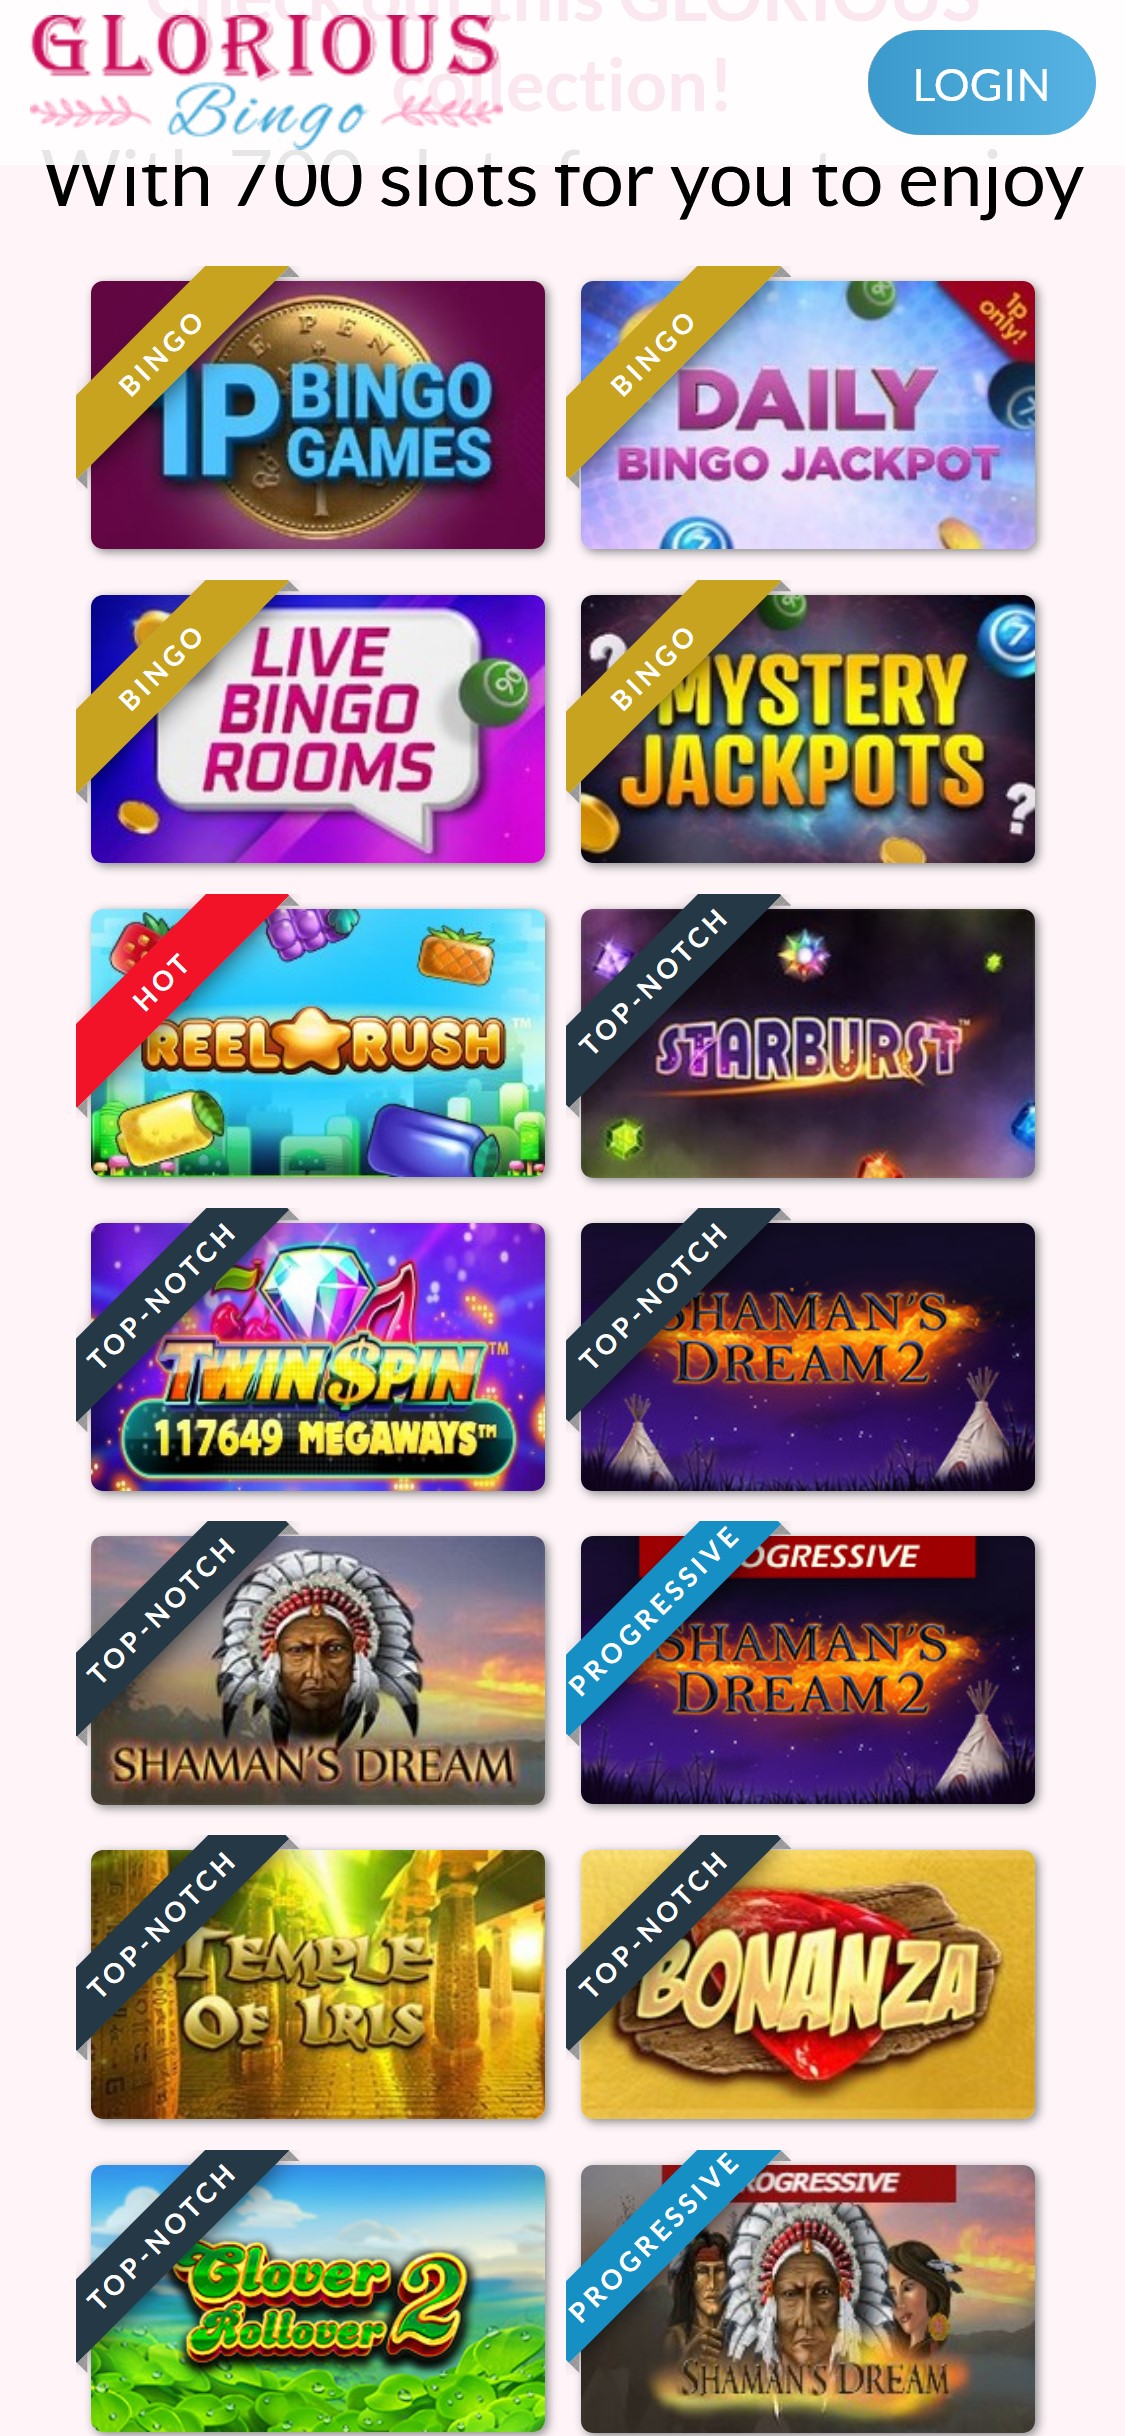 Glorious Bingo Casino Mobile Games Review